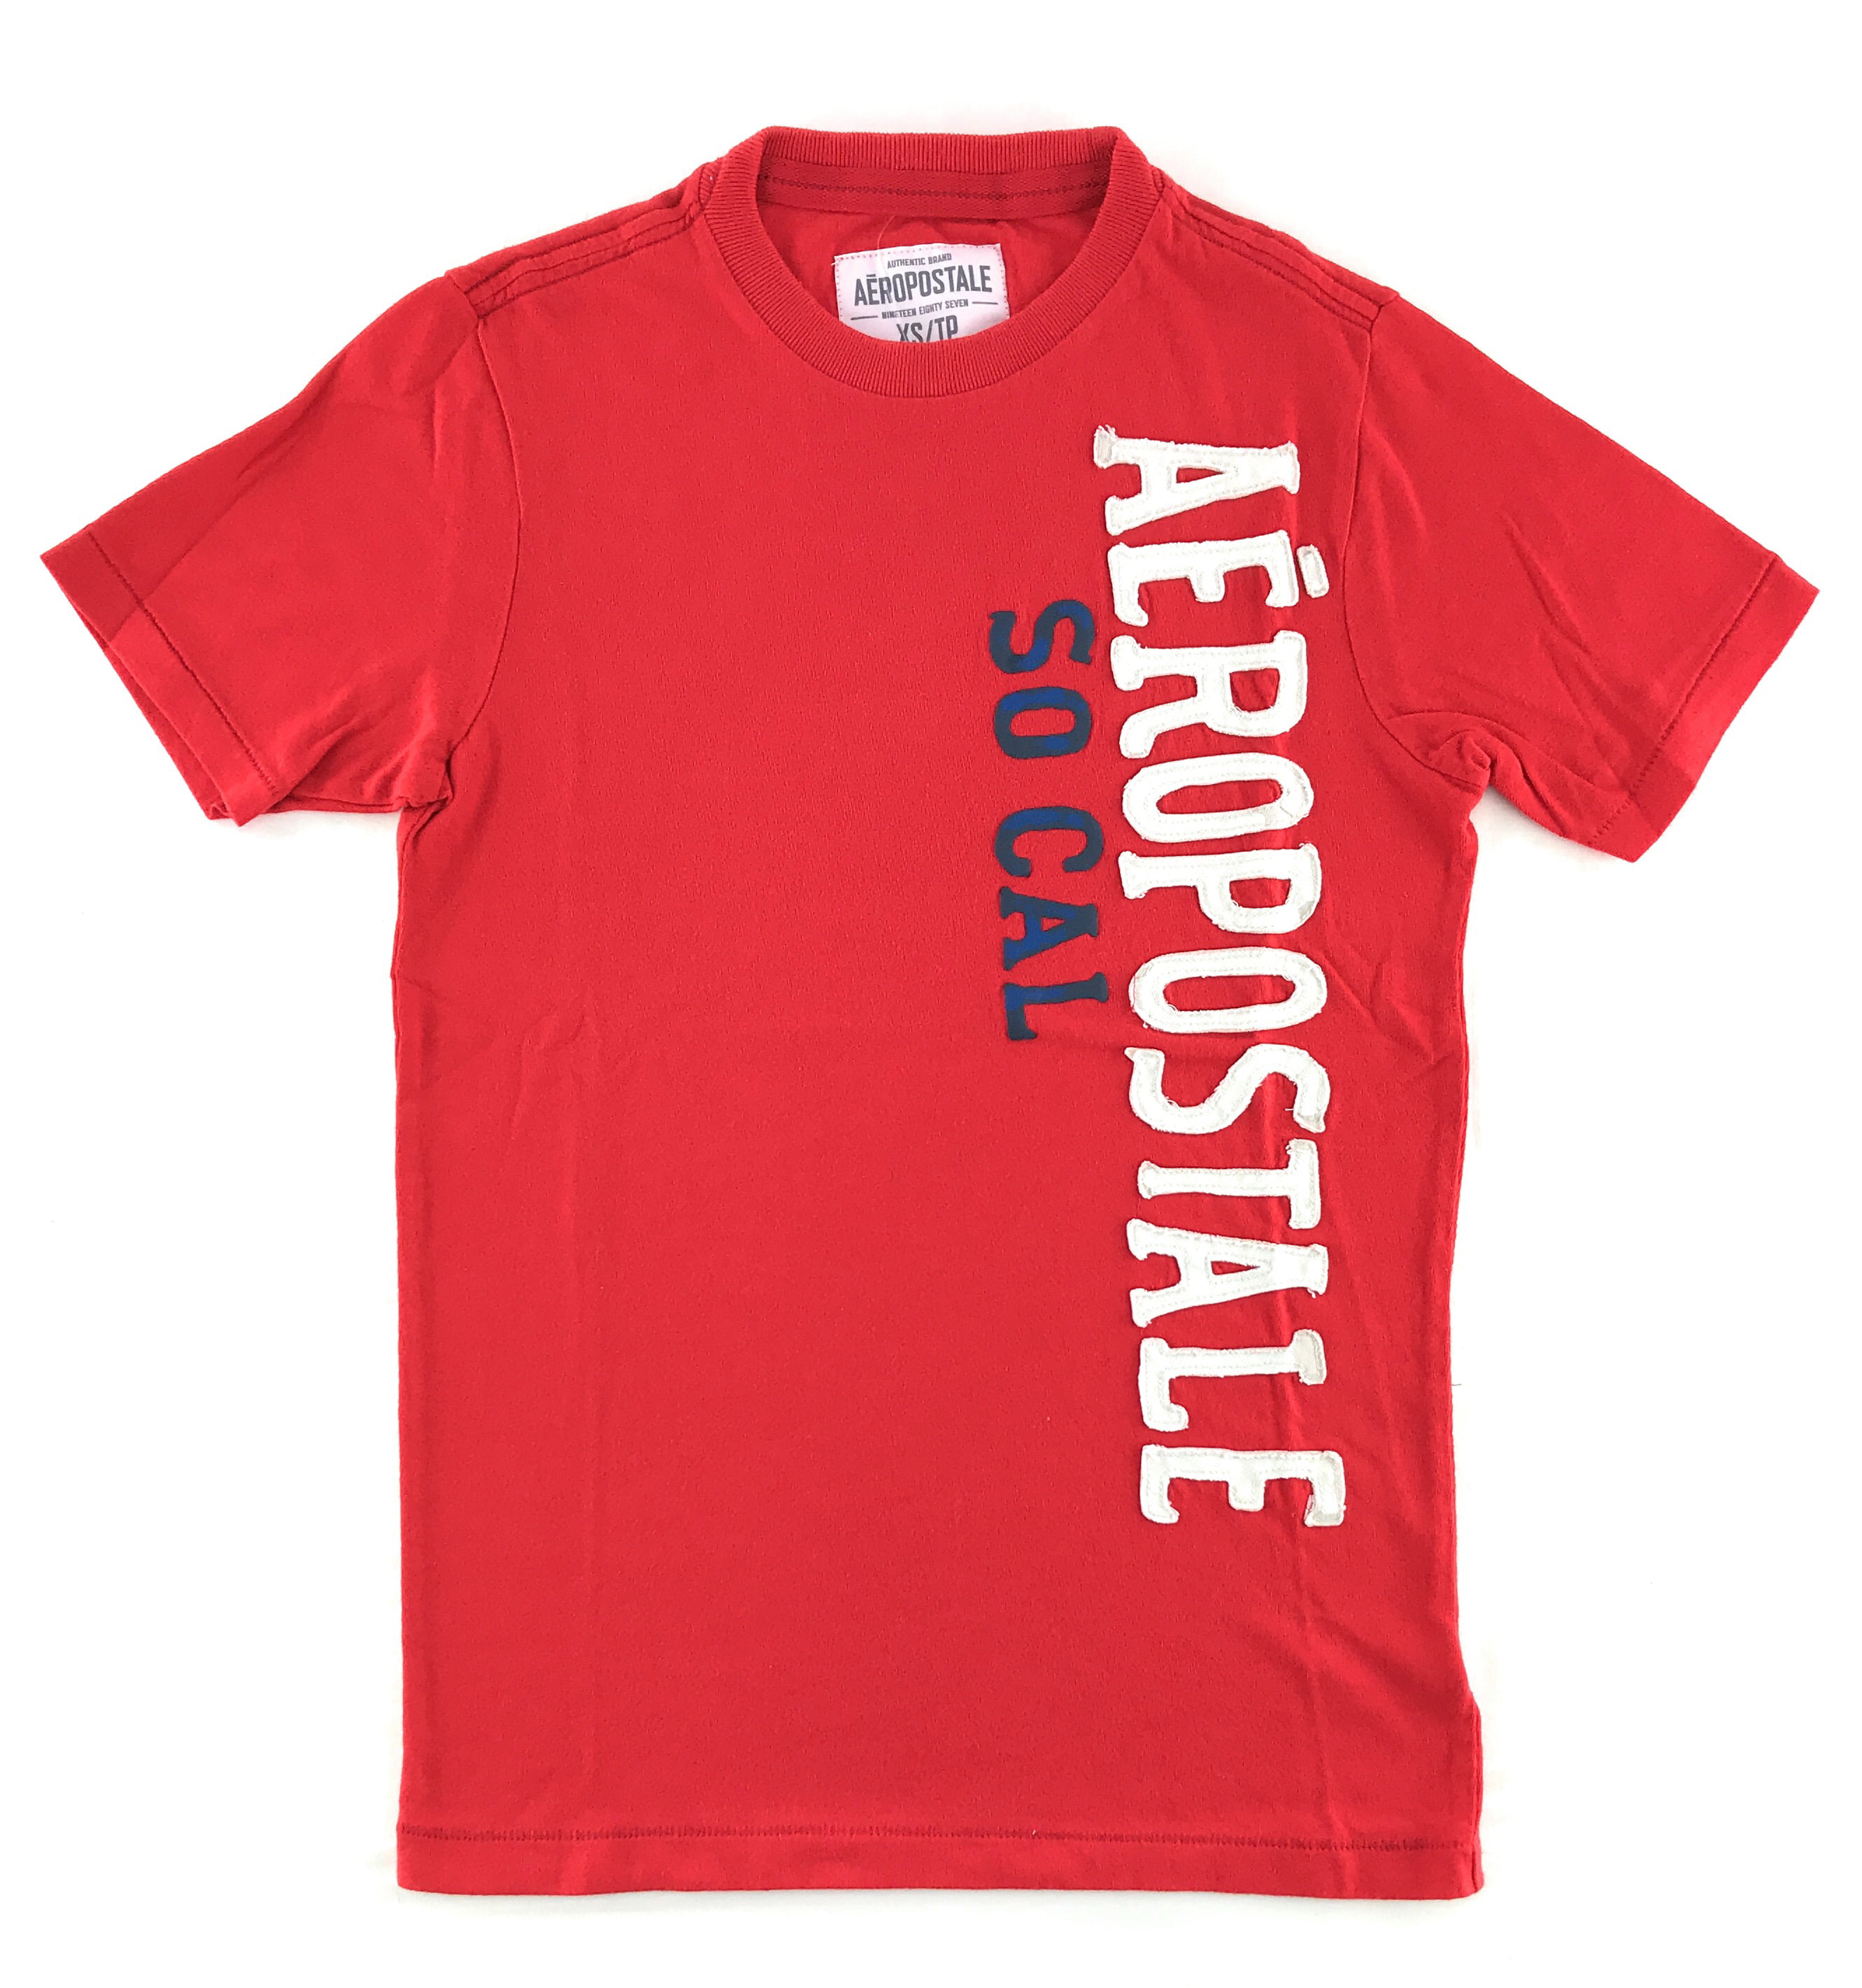 Aeropostale - Aeropostale Men's Graphic Logo T-Shirt - Walmart.com ...